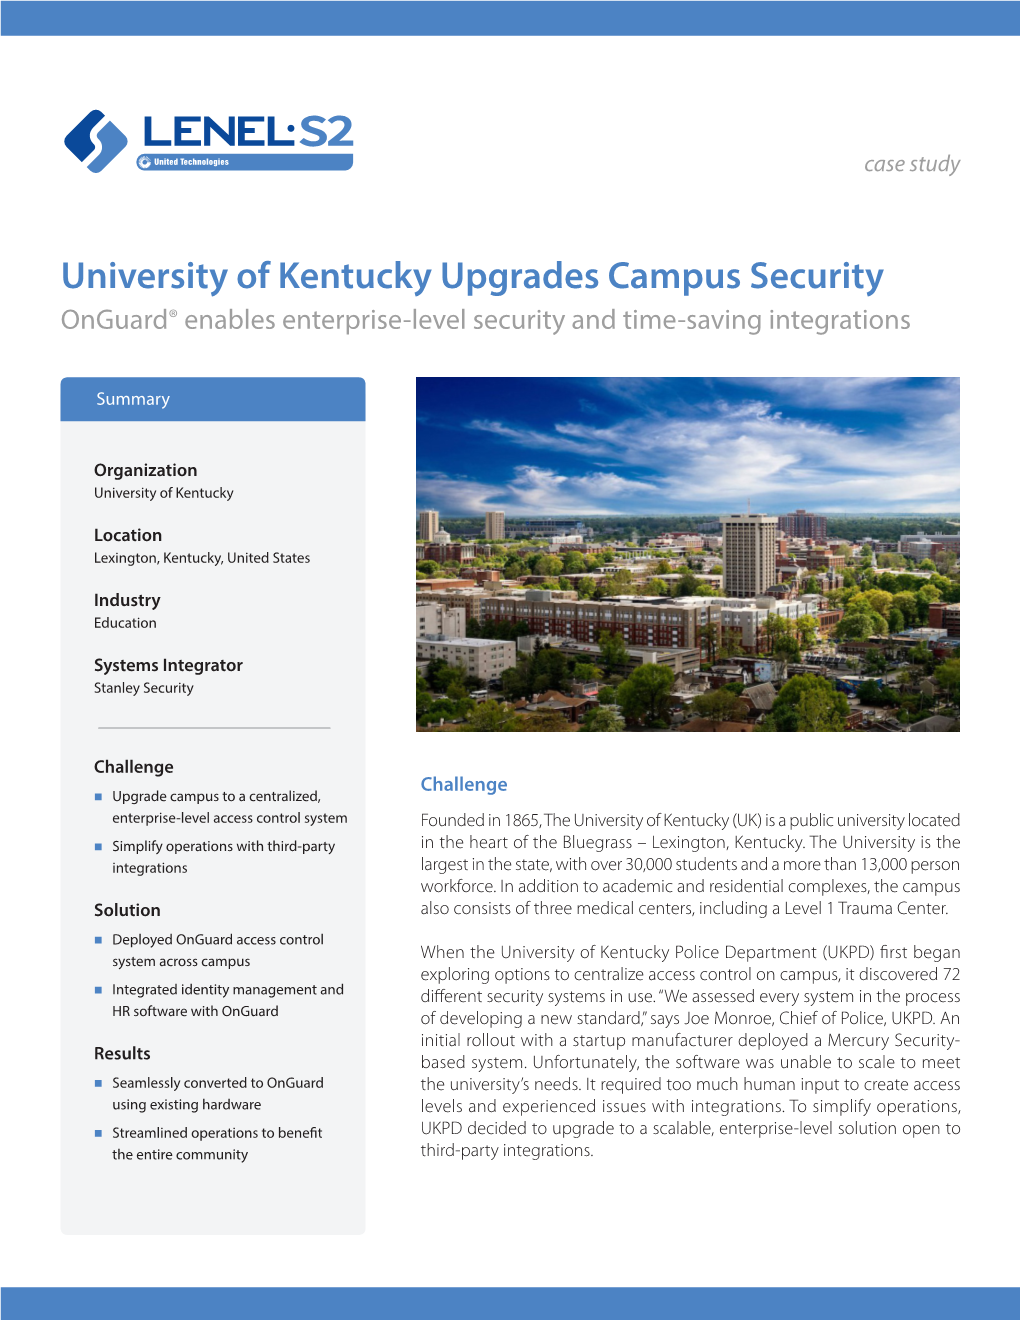 University of Kentucky Case Study